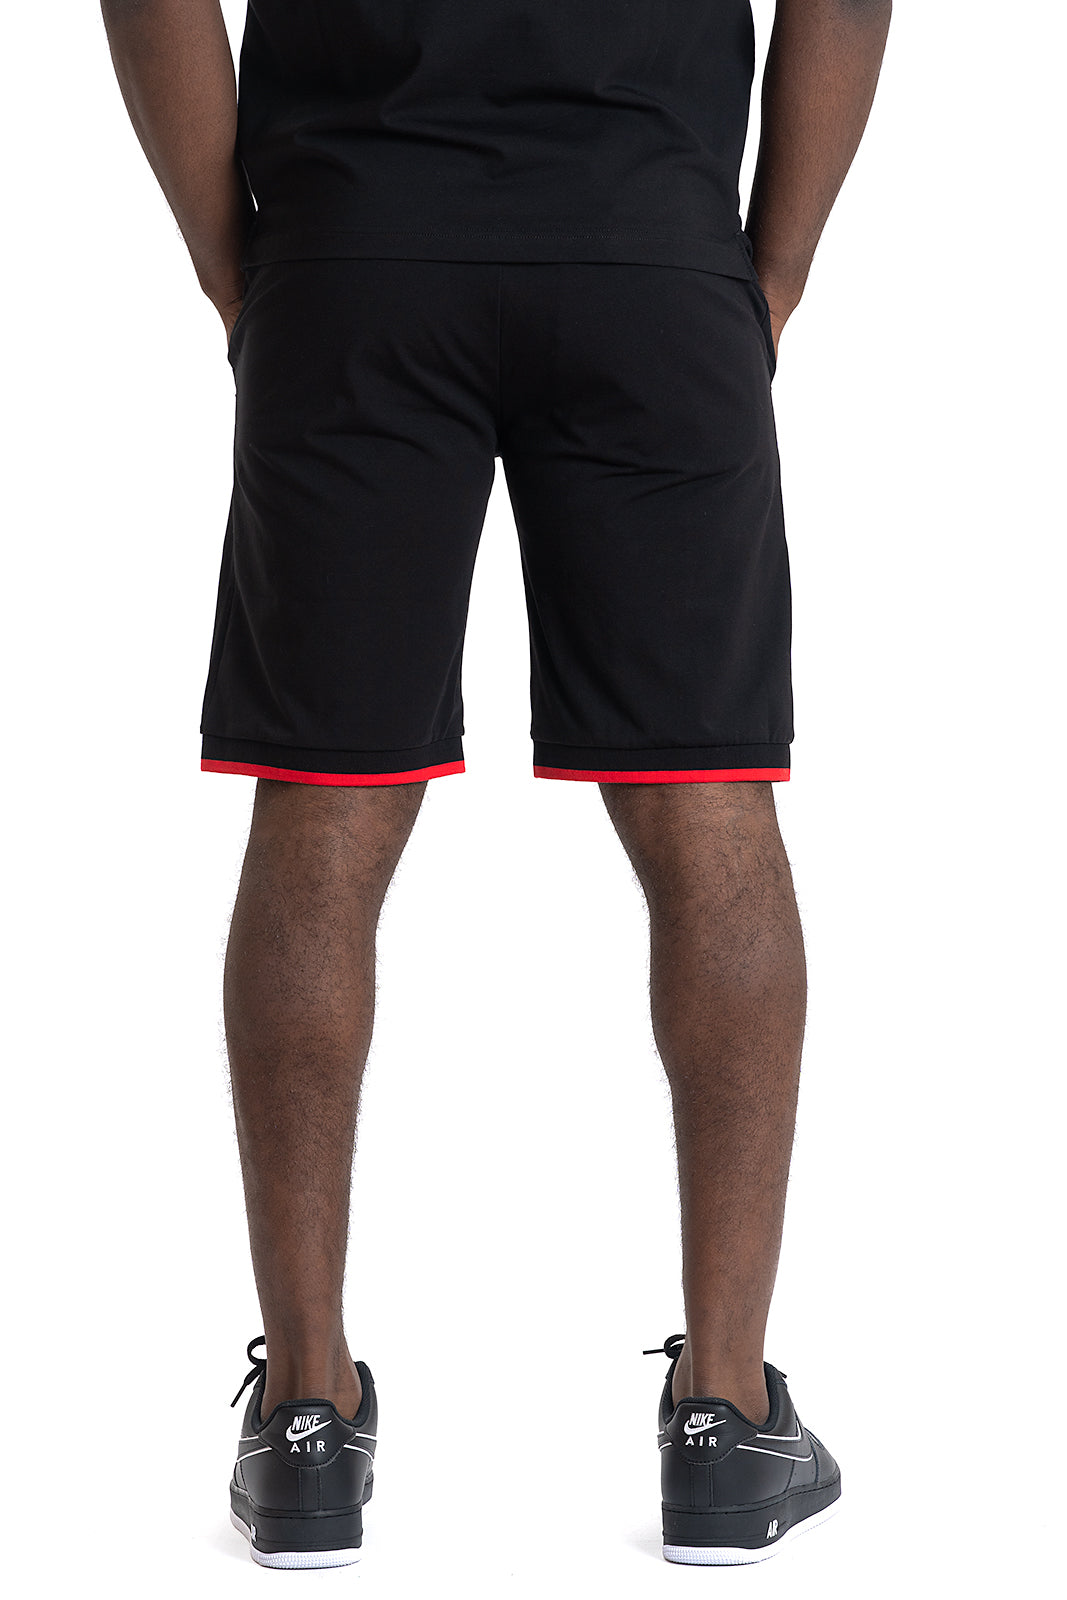 M601 Makobi Ricci Core Shorts - Black.Red